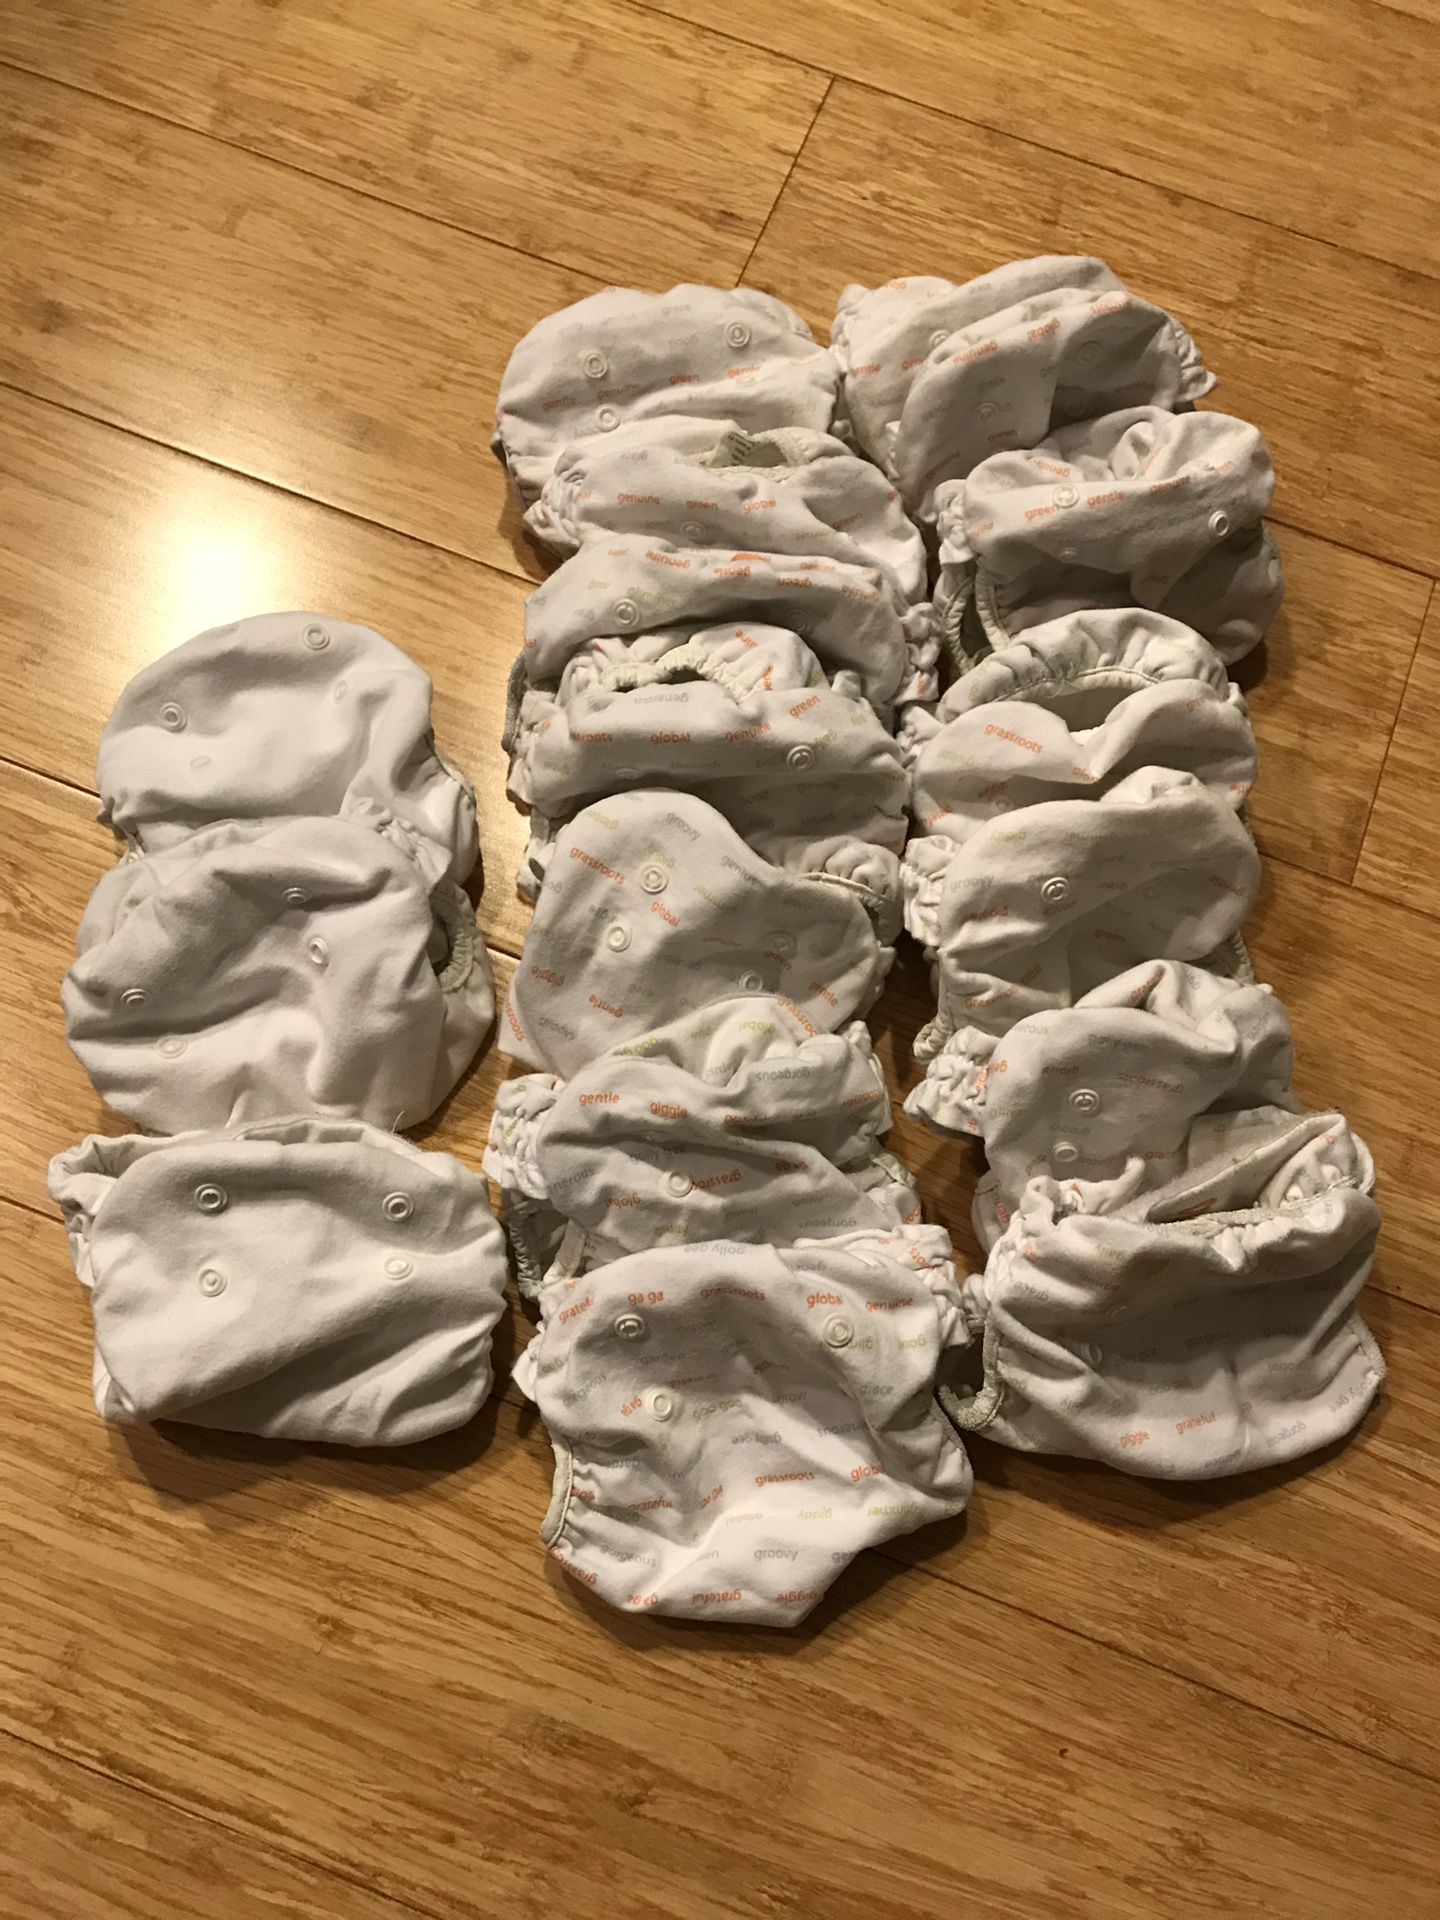 G diapers size XS/newborn